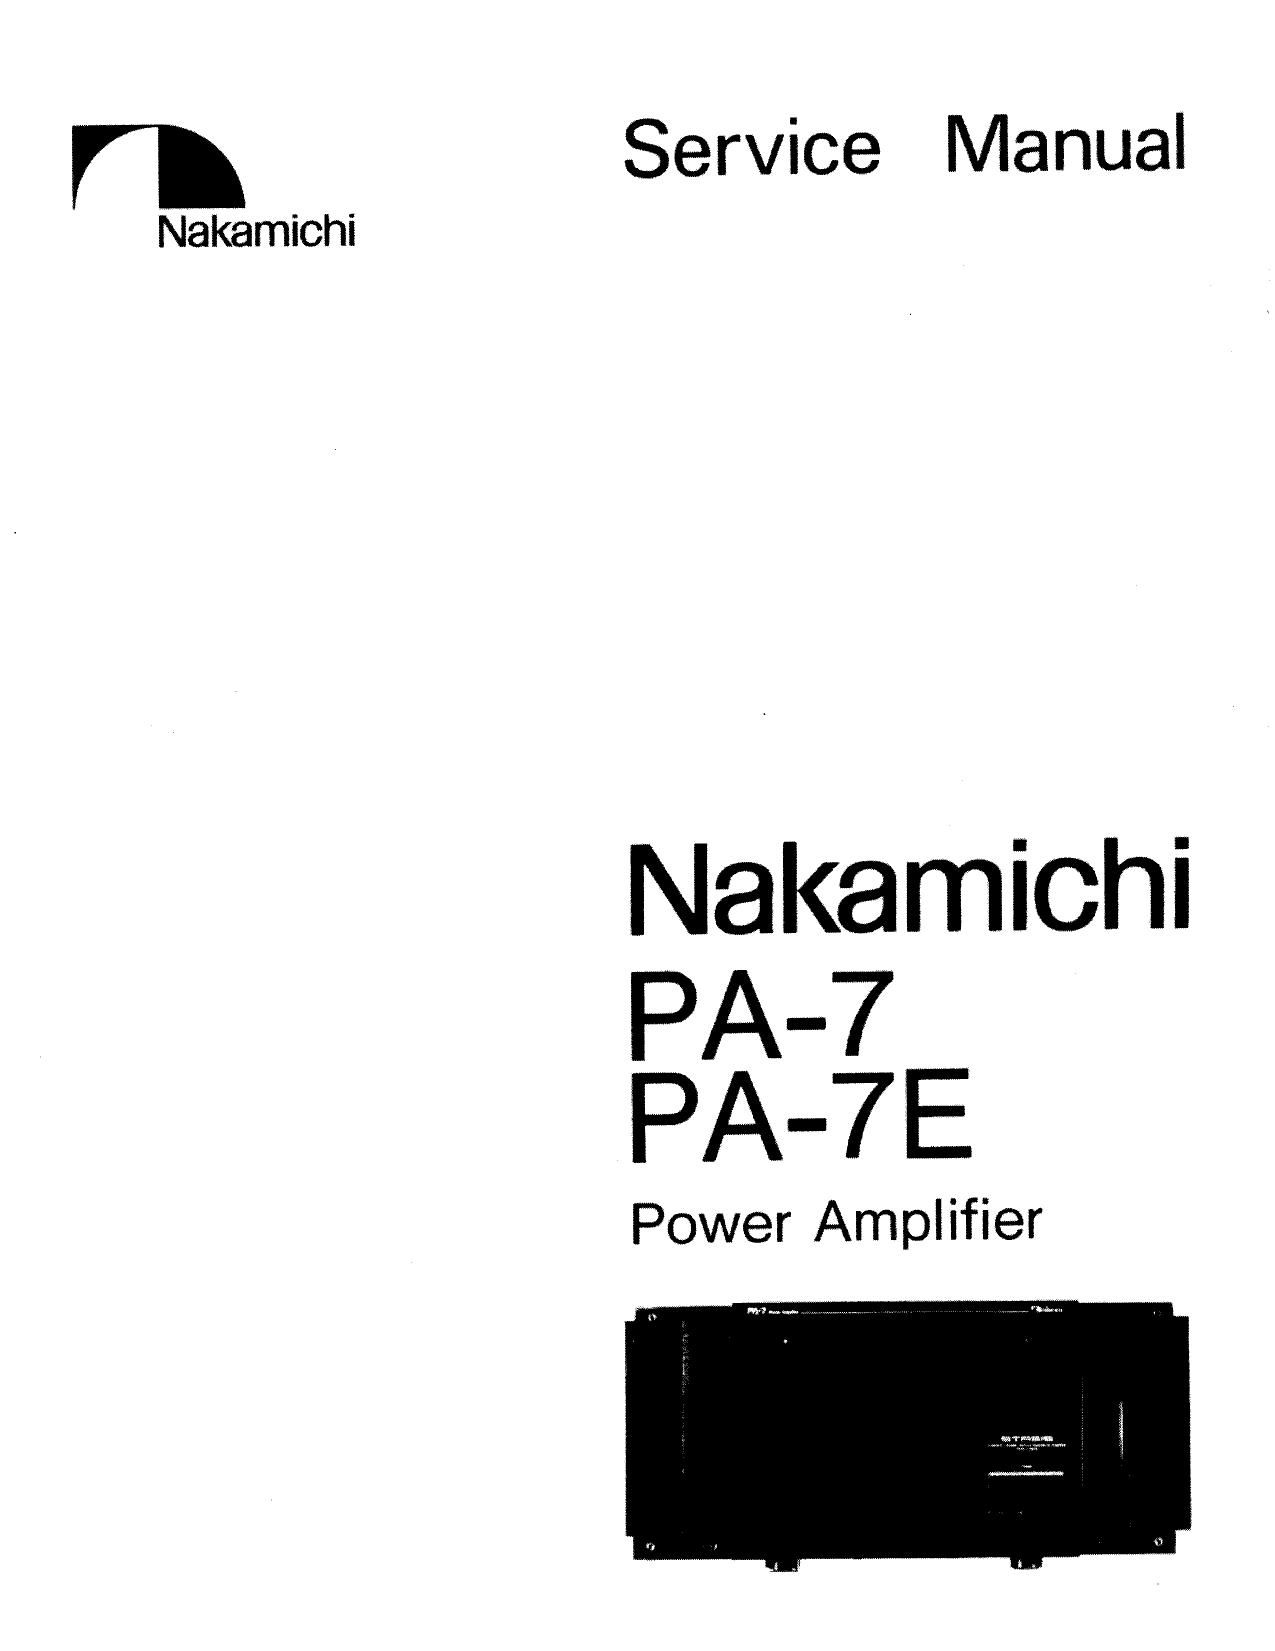 Nakamichi PA 7E Service Manual